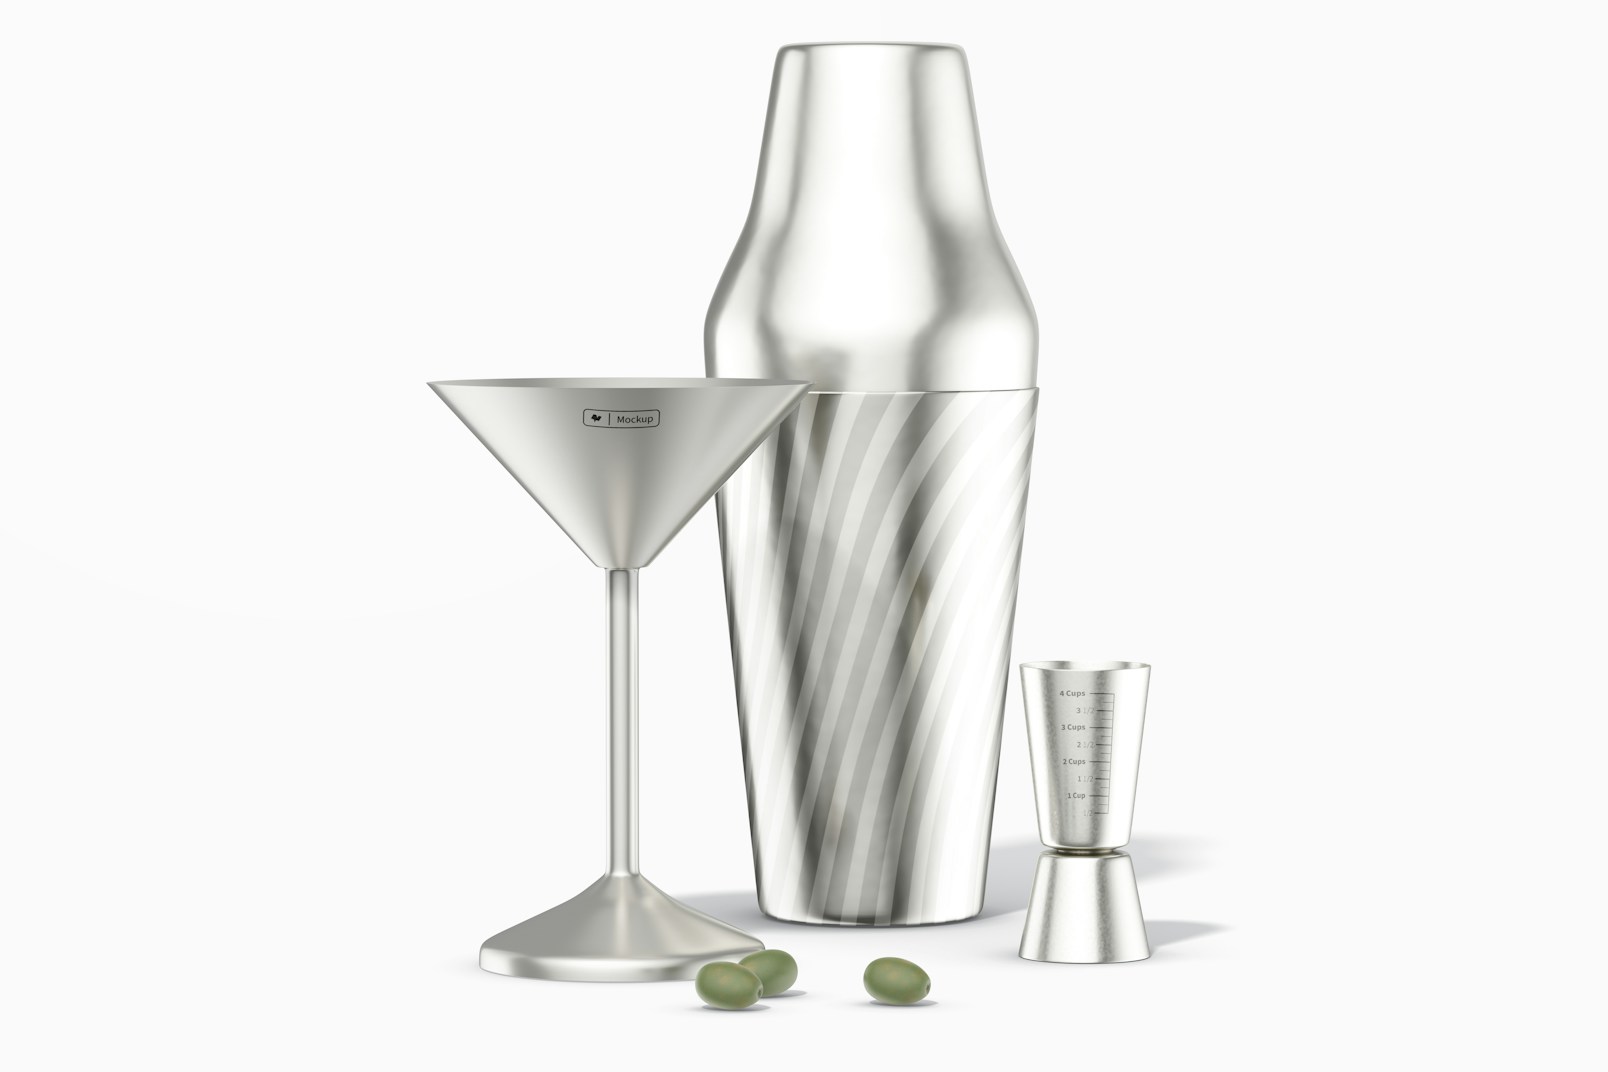 Stainless Steel Martini Glass Set Mockup